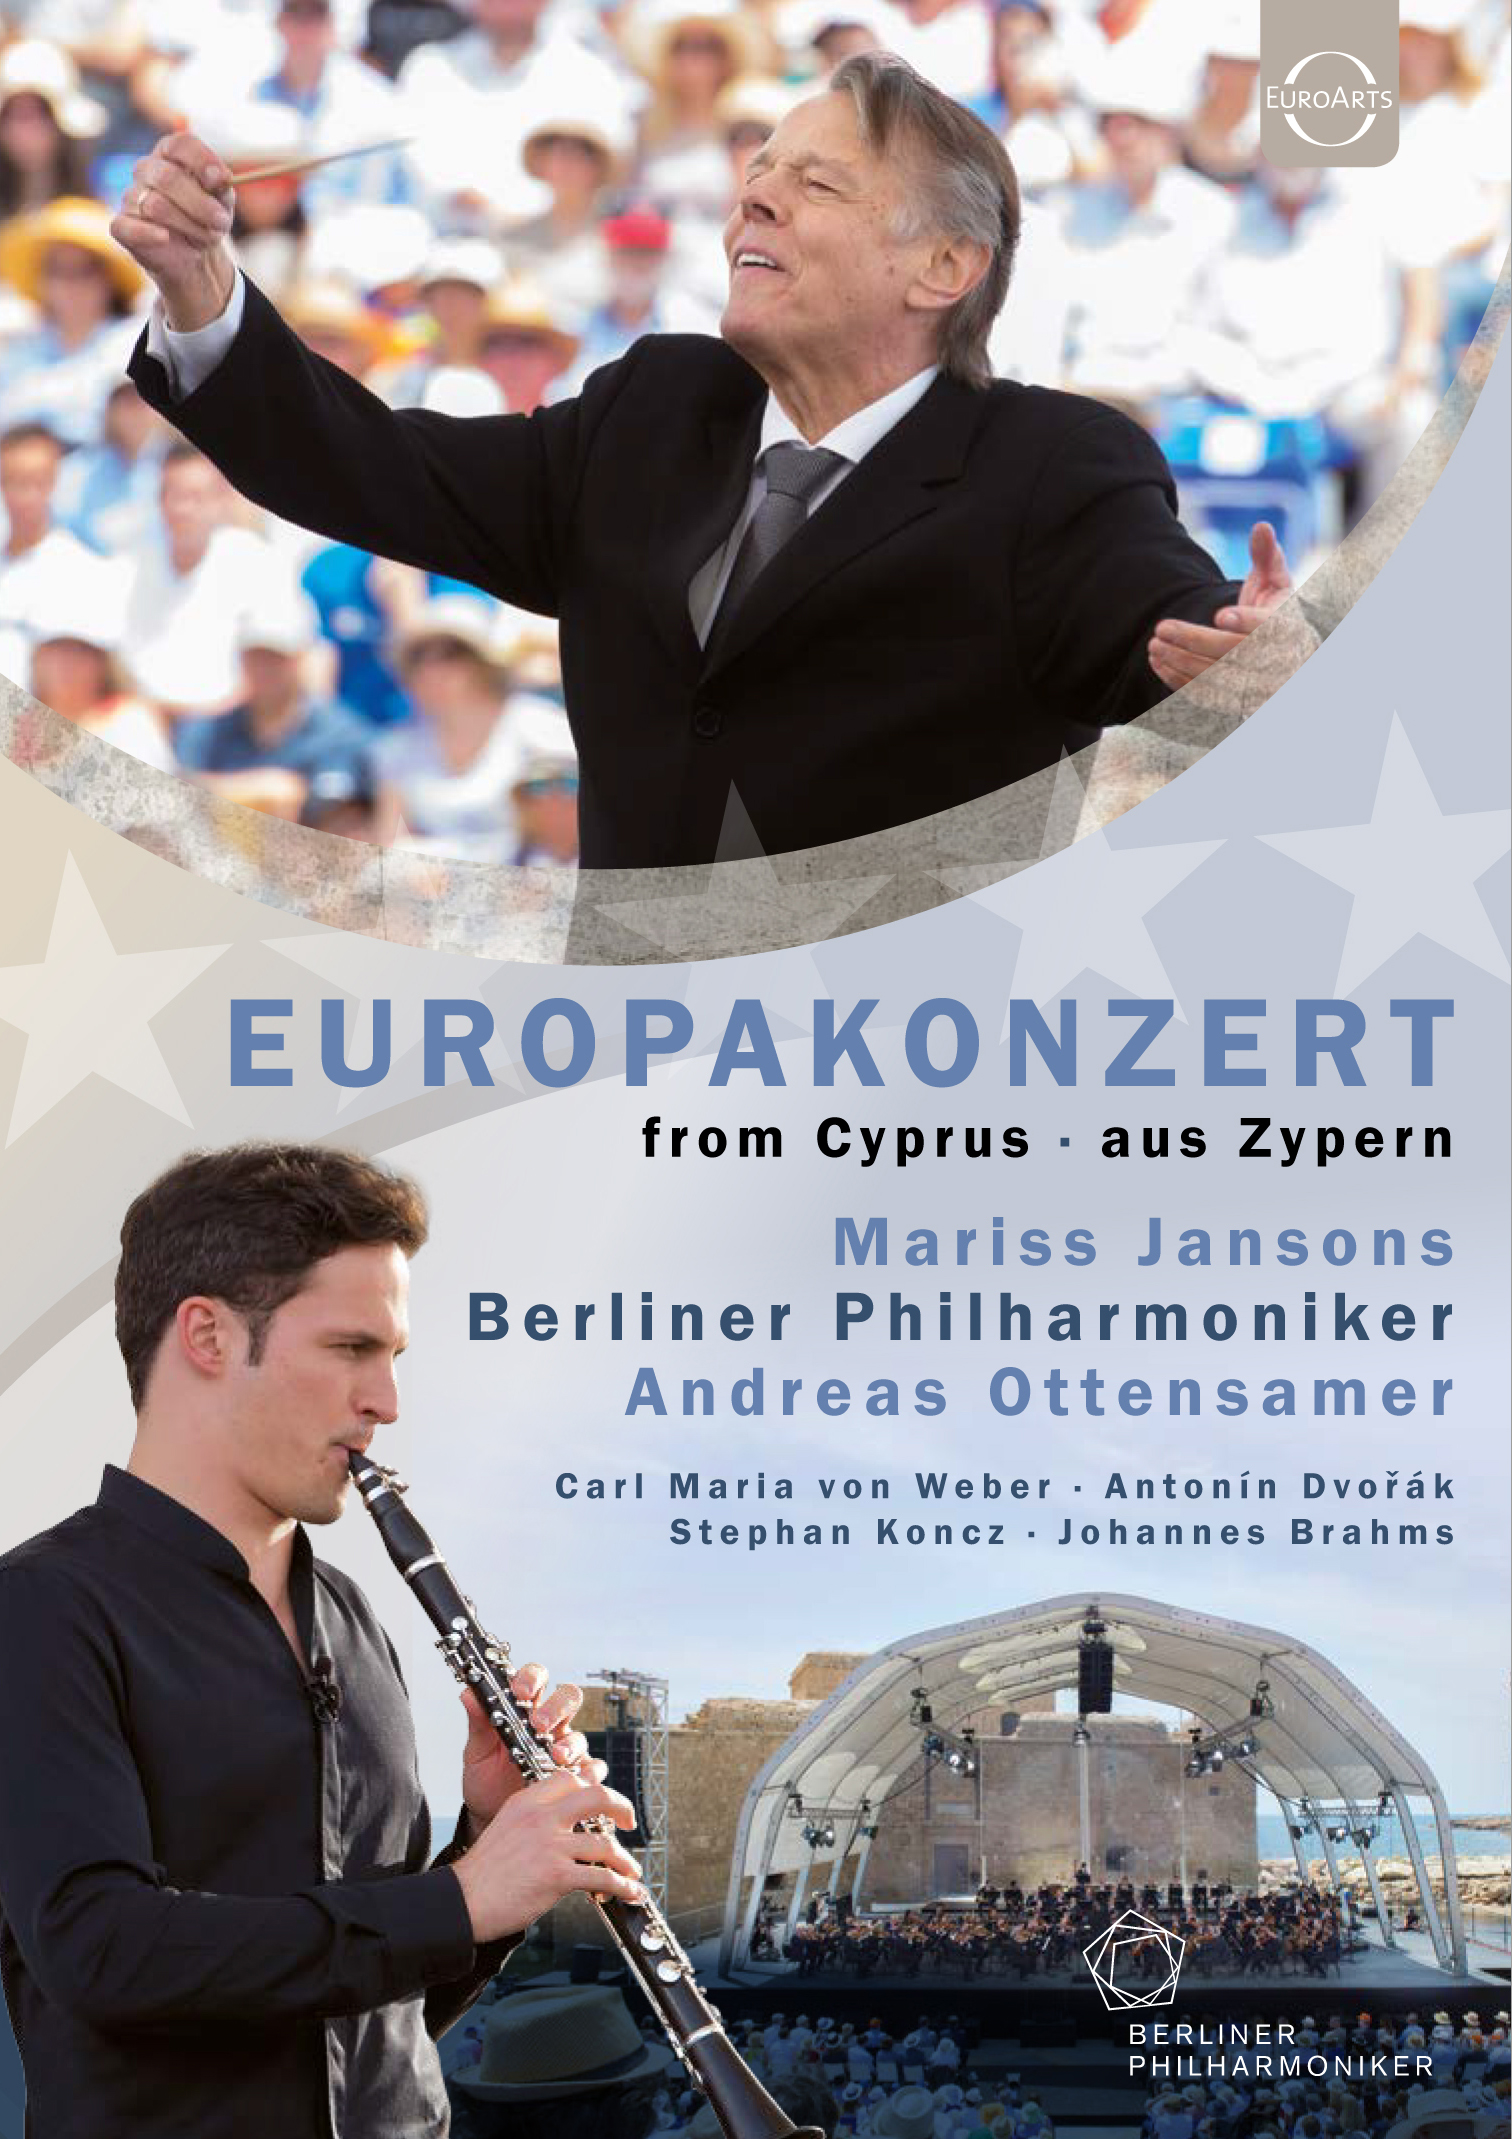 Europakonzert 2017 from Cyprus | Warner Classics